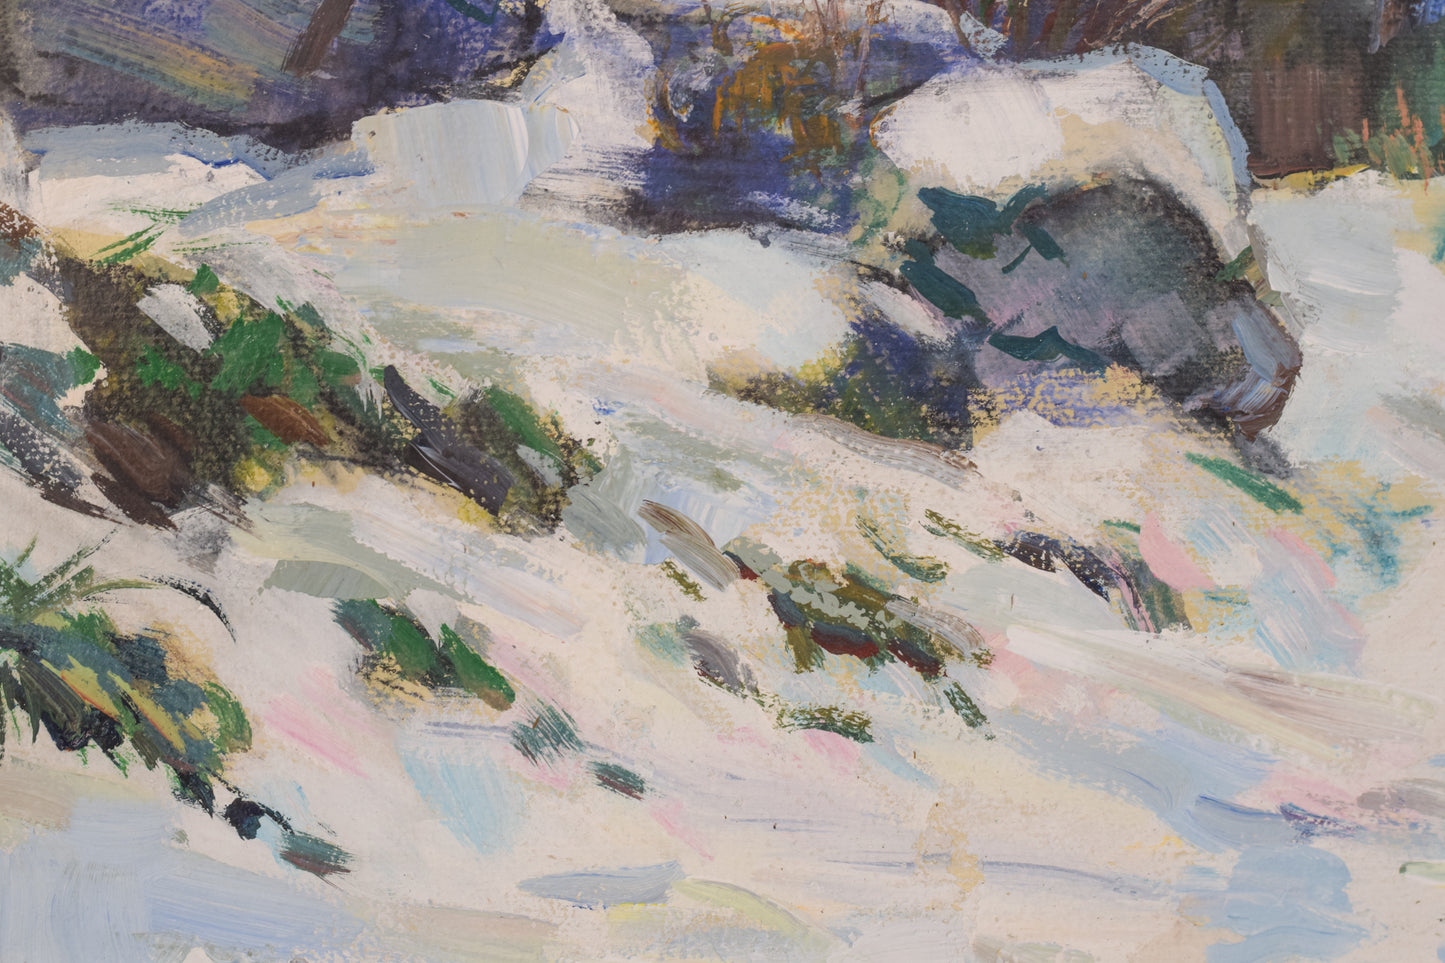 Pintura impresionista de paisaje nevado